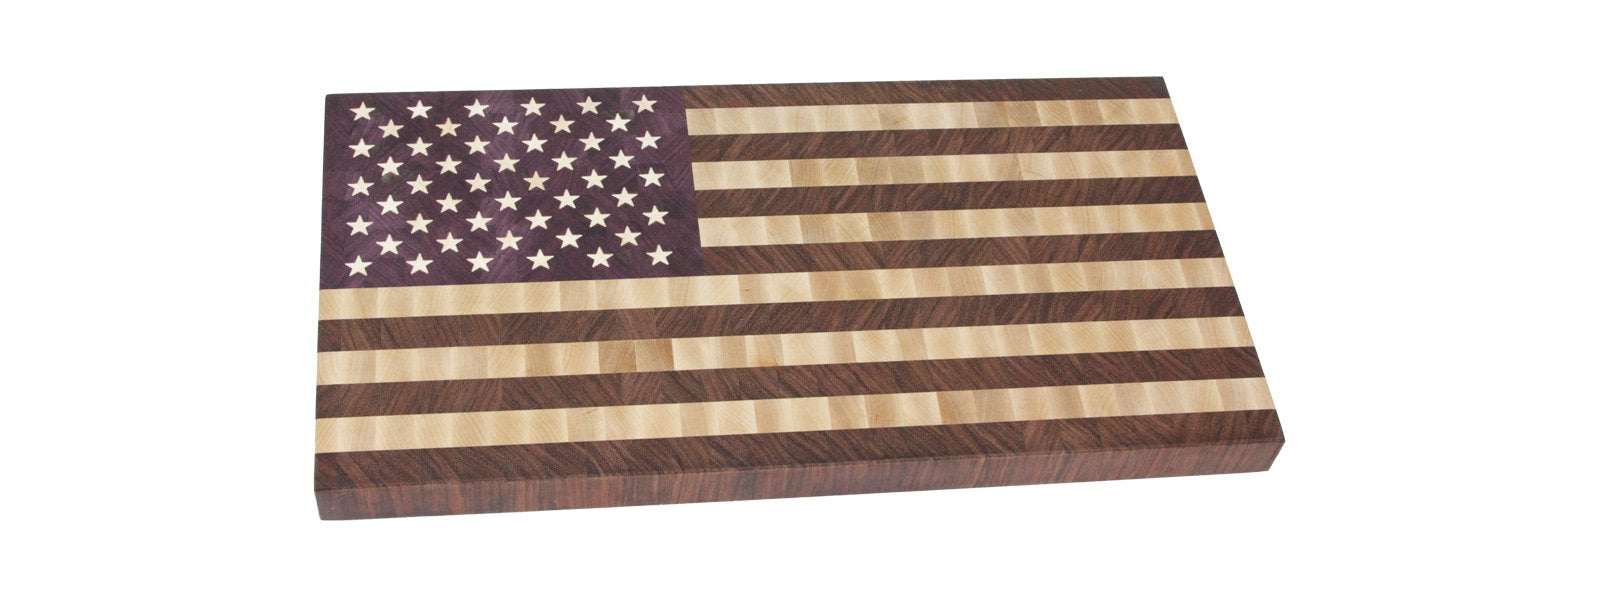 American Flag end grain cutting board